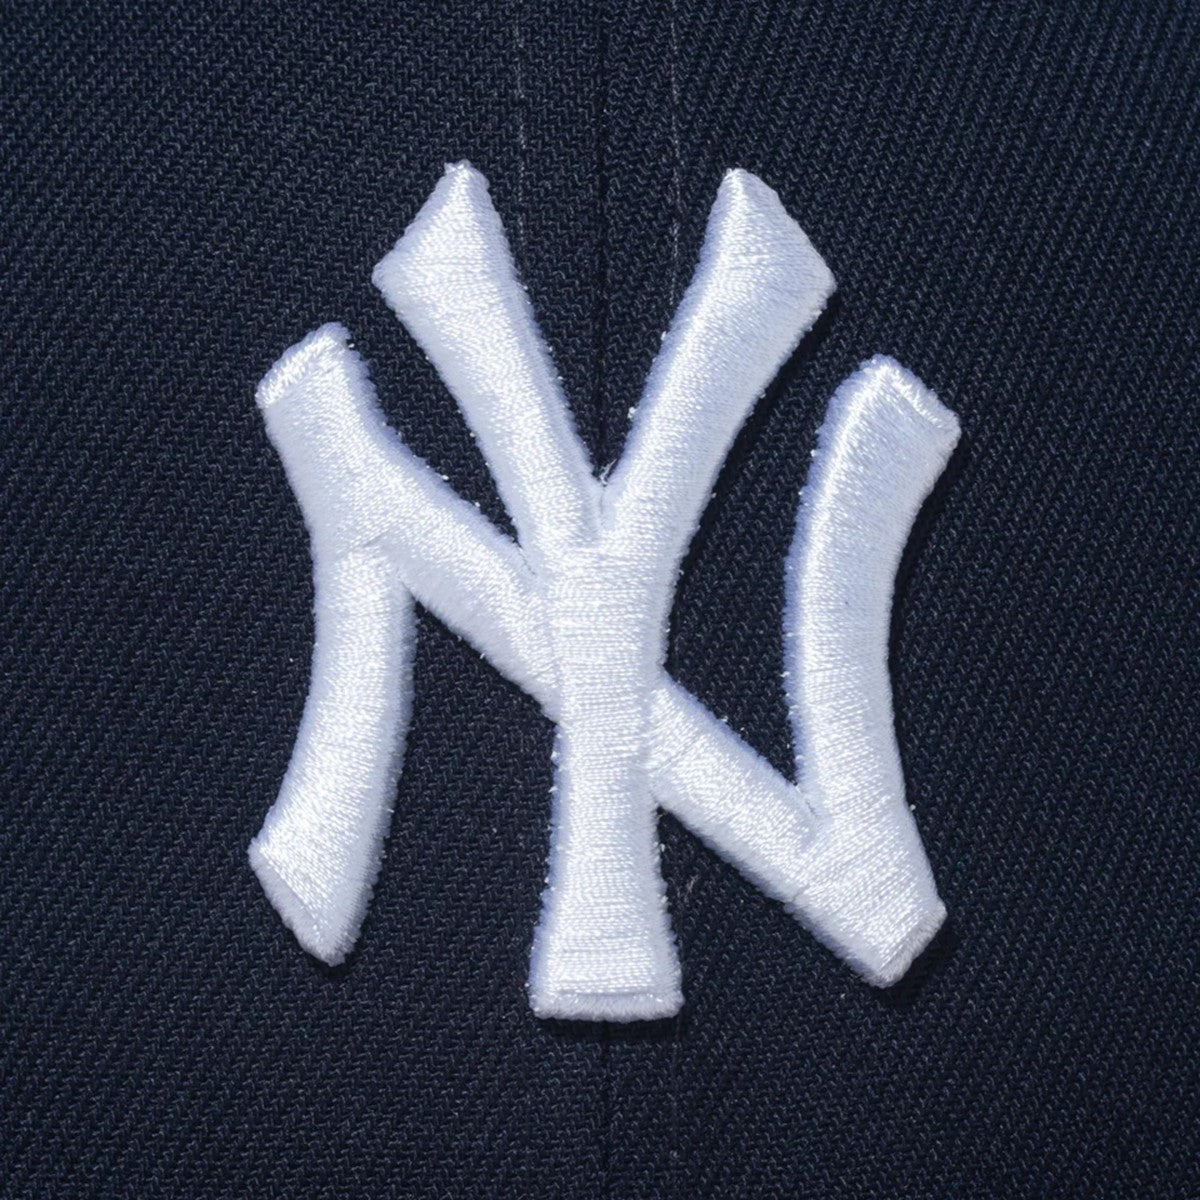 NEW ERA New York Yankees - 9FIFTY NEYYAN NVY WHE SWHT【13562087】